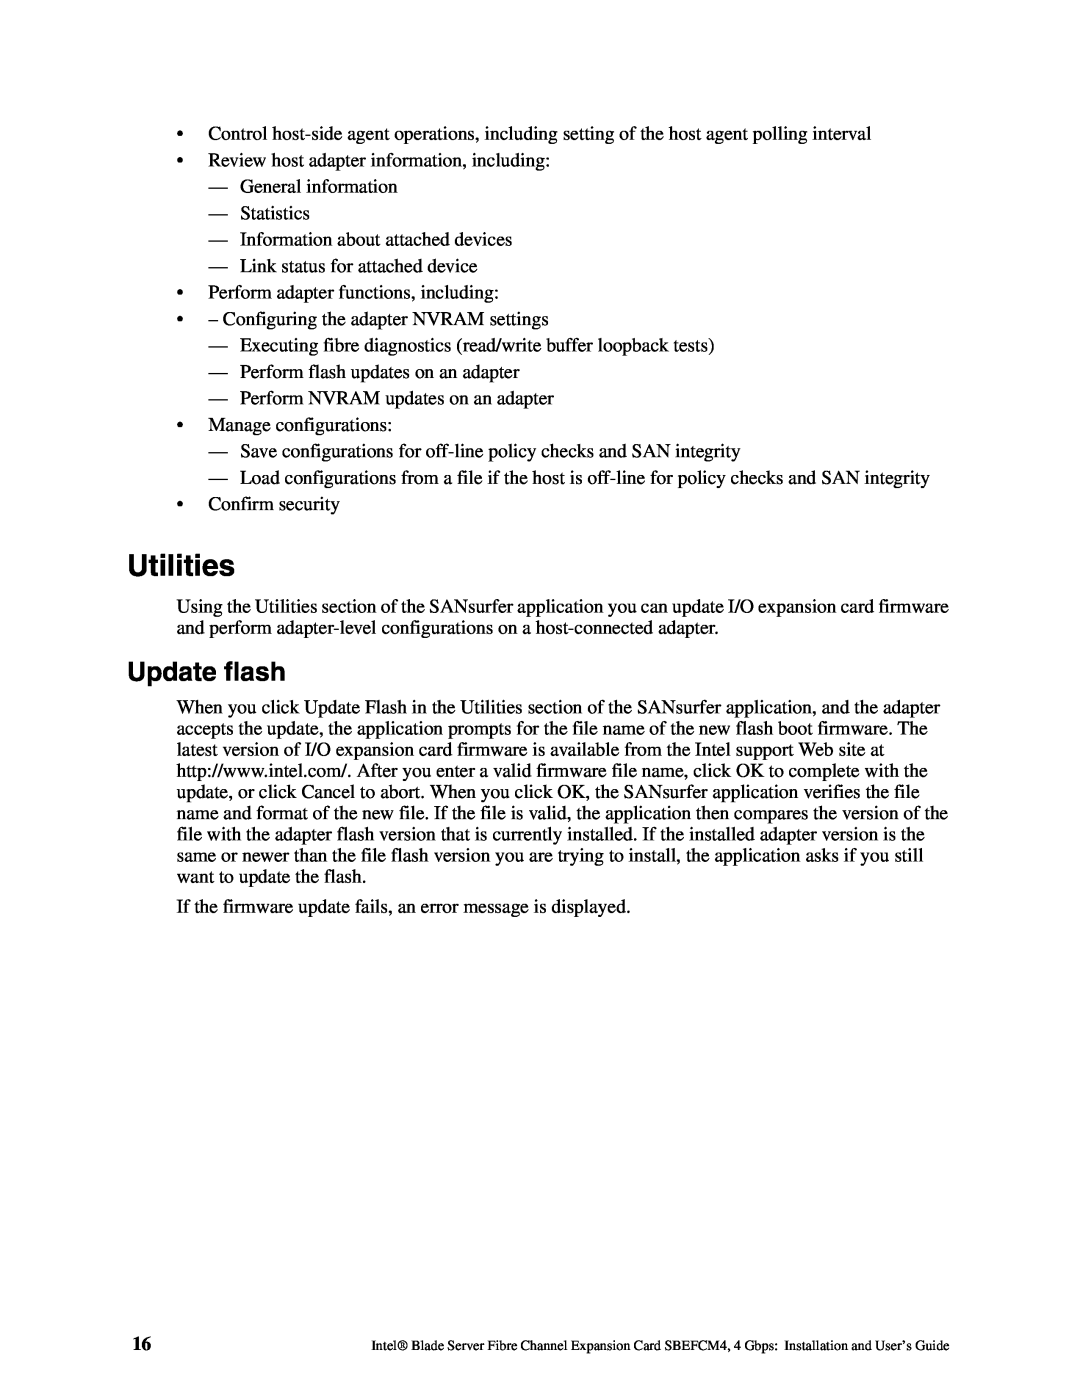 Intel SEBFCM4 manual Utilities, Update flash 